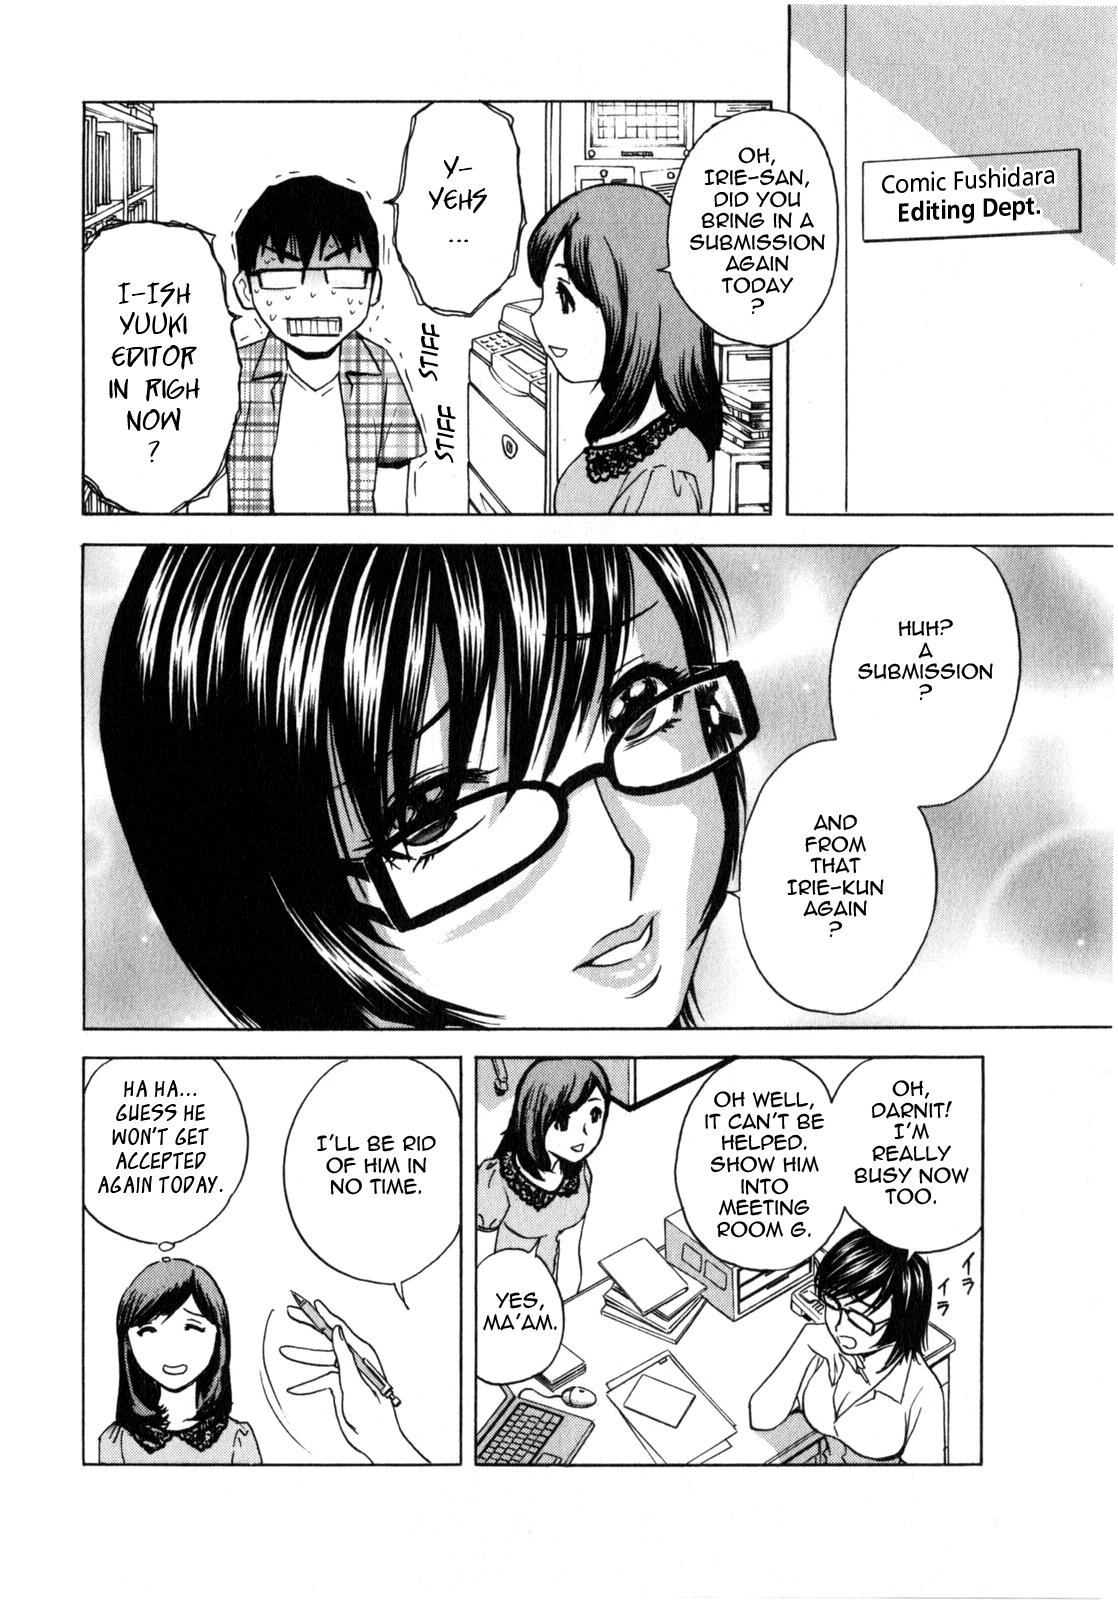 [Hidemaru] Life with Married Women Just Like a Manga 1 - Ch. 1-9 [English] {Tadanohito} 107